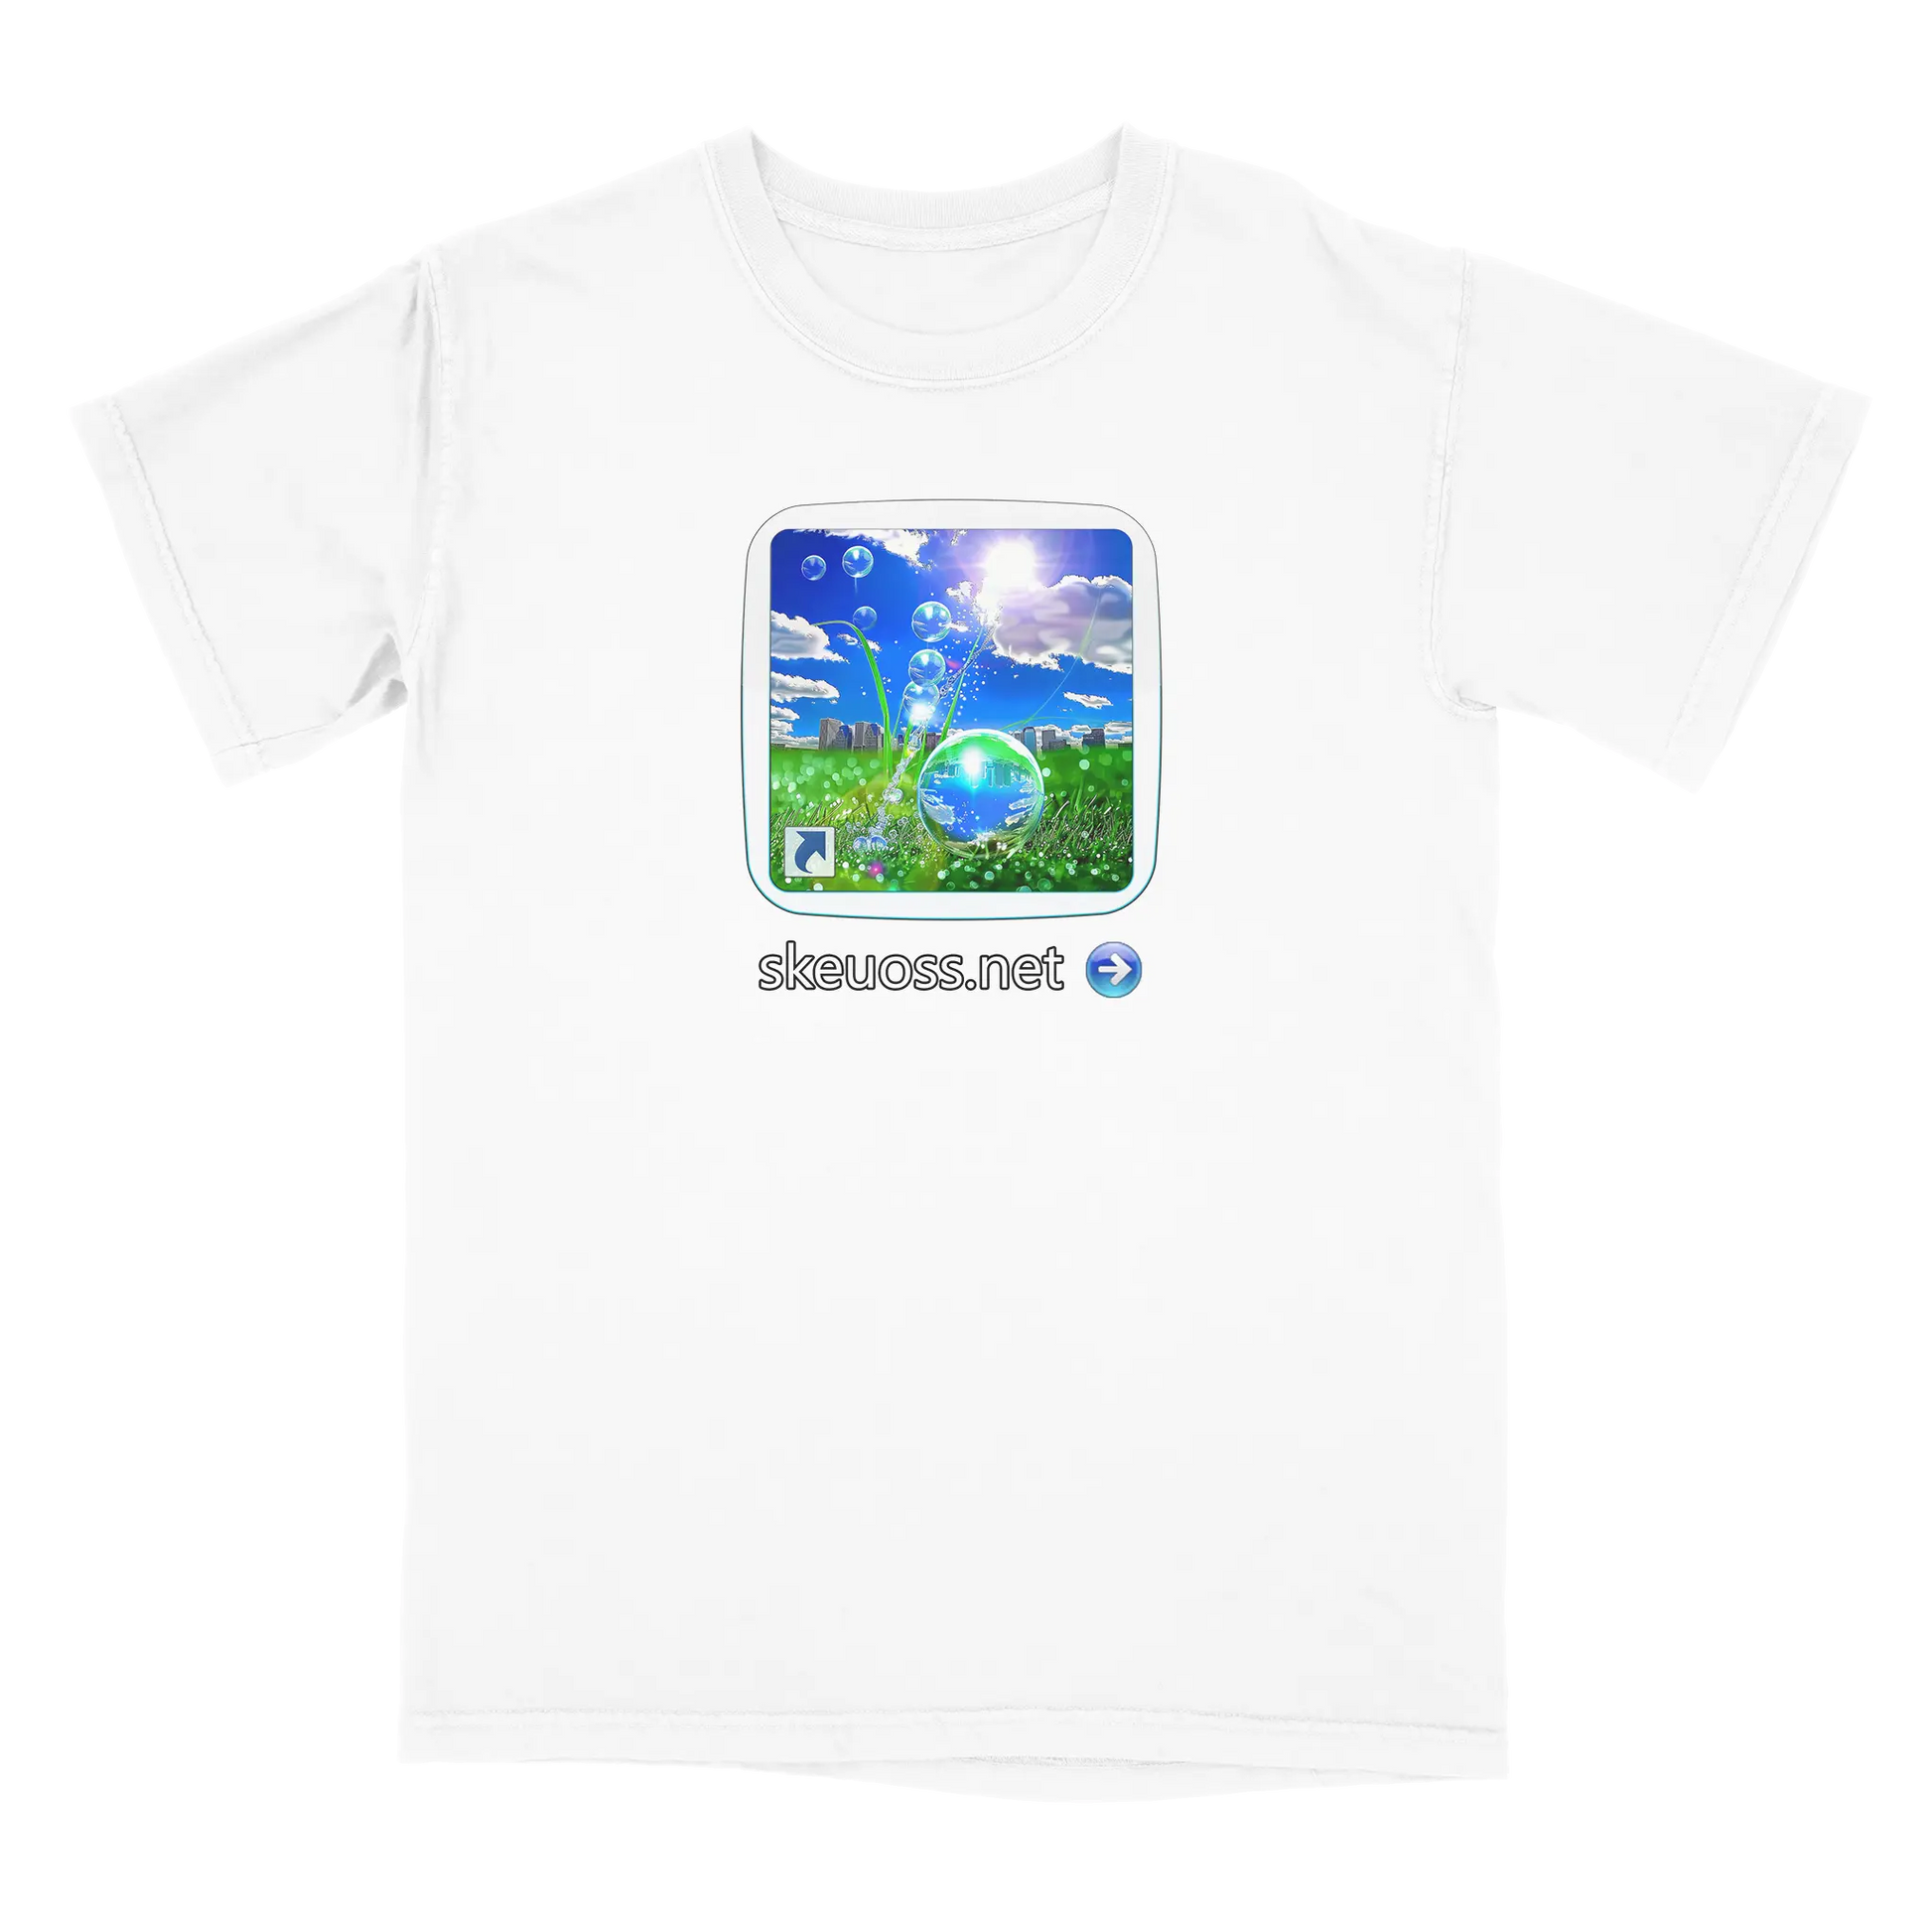 Frutiger Aero T-shirt - User Login Collection - User 266